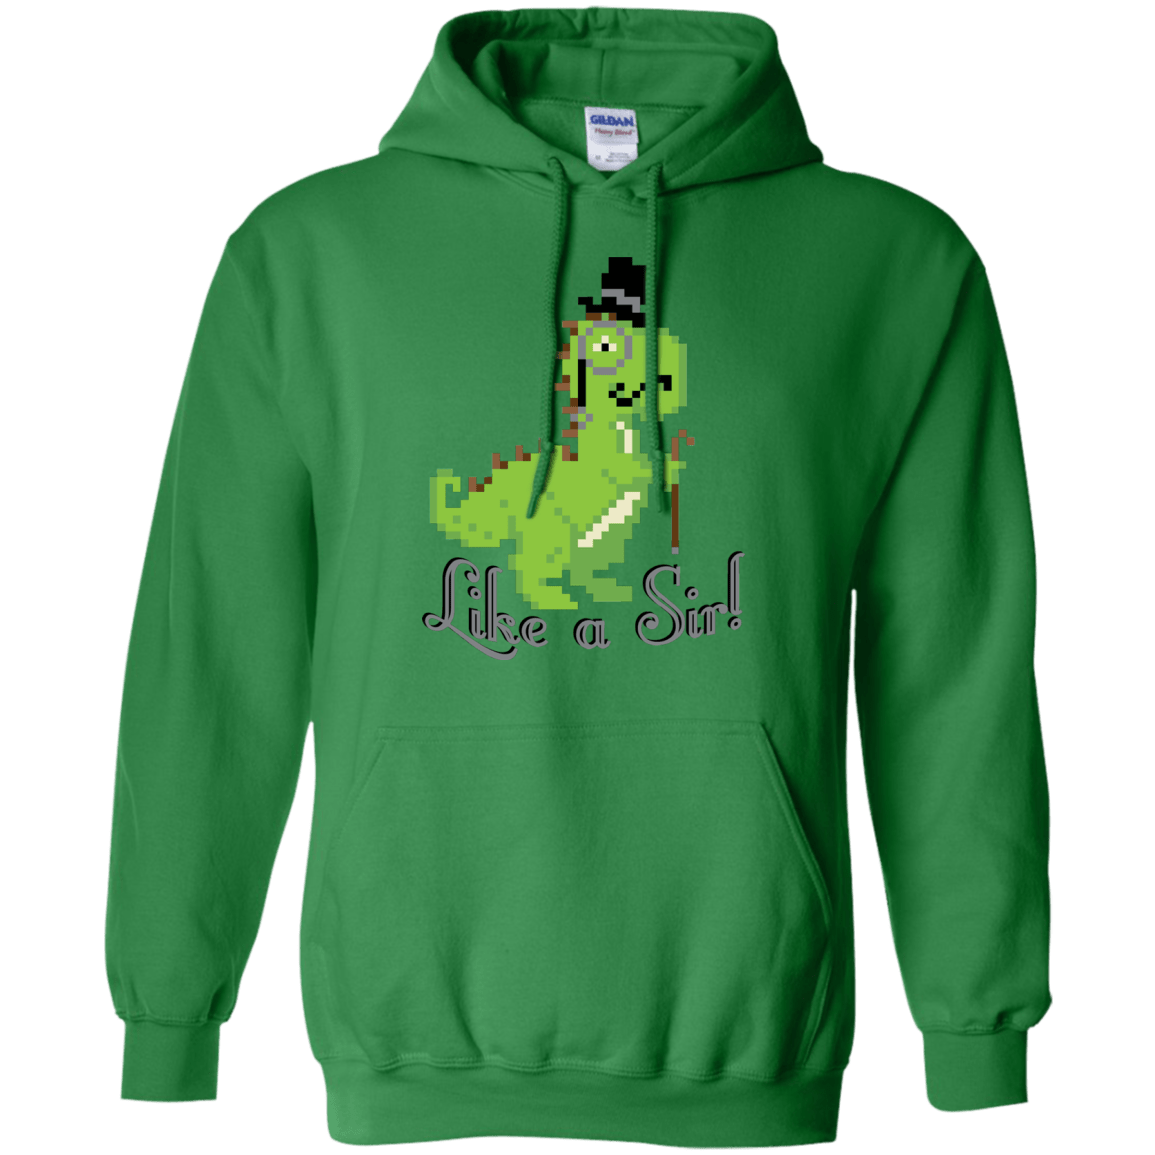 Sweatshirts Irish Green / S LikeASir T-Rex Pullover Hoodie